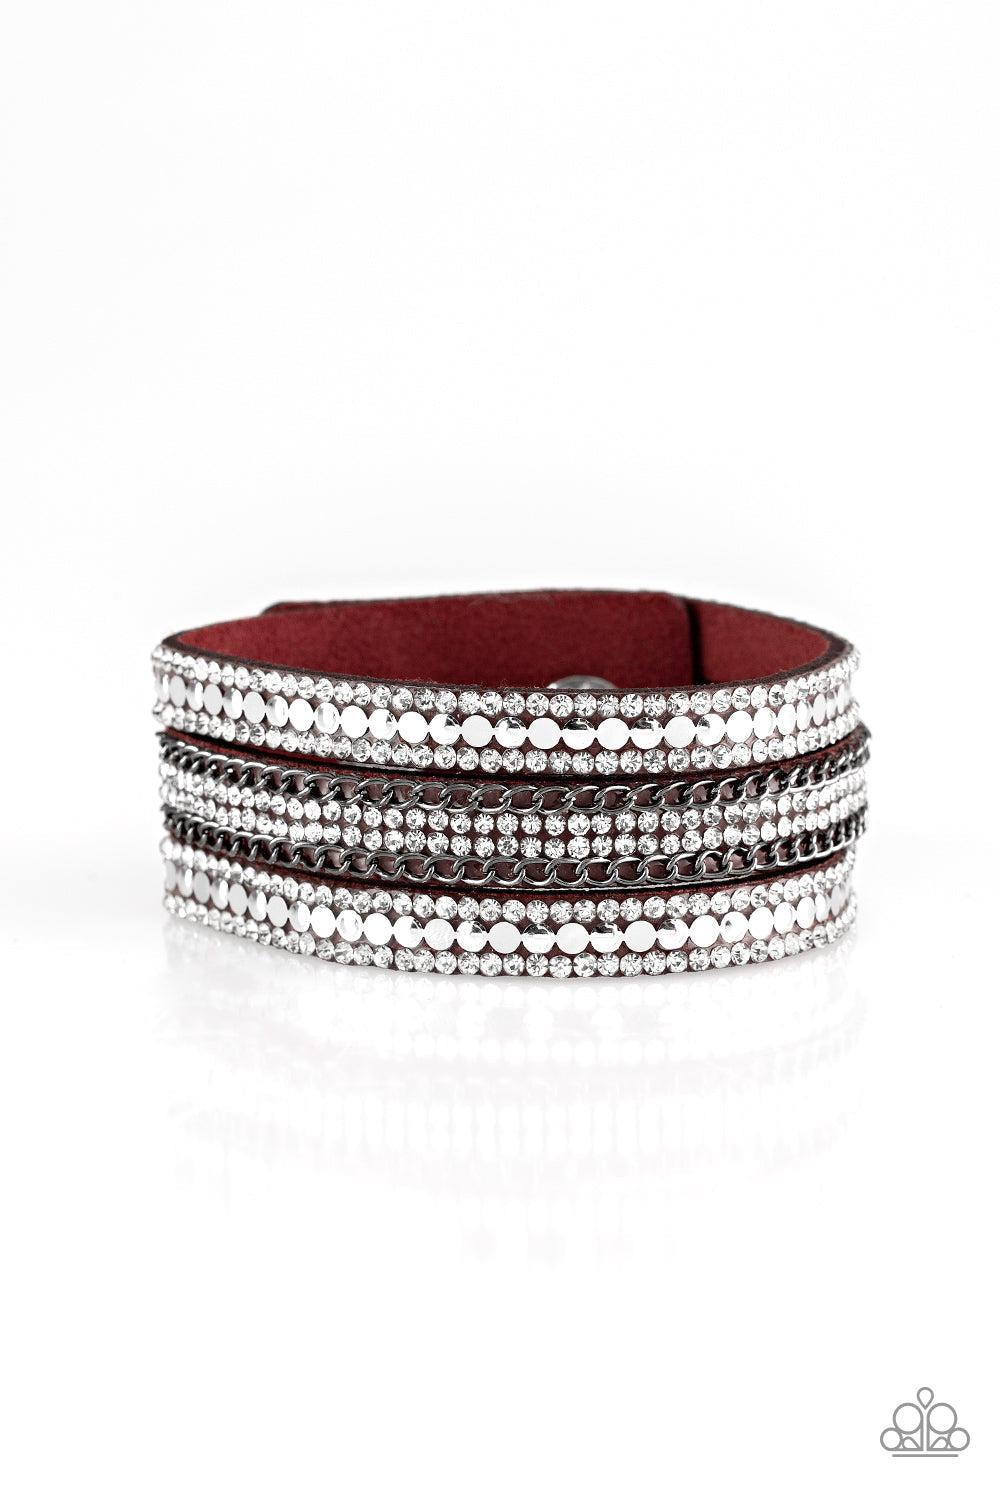 Fashion Fanatic Red Urban Wrap Bracelet - Paparazzi Accessories- lightbox - CarasShop.com - $5 Jewelry by Cara Jewels